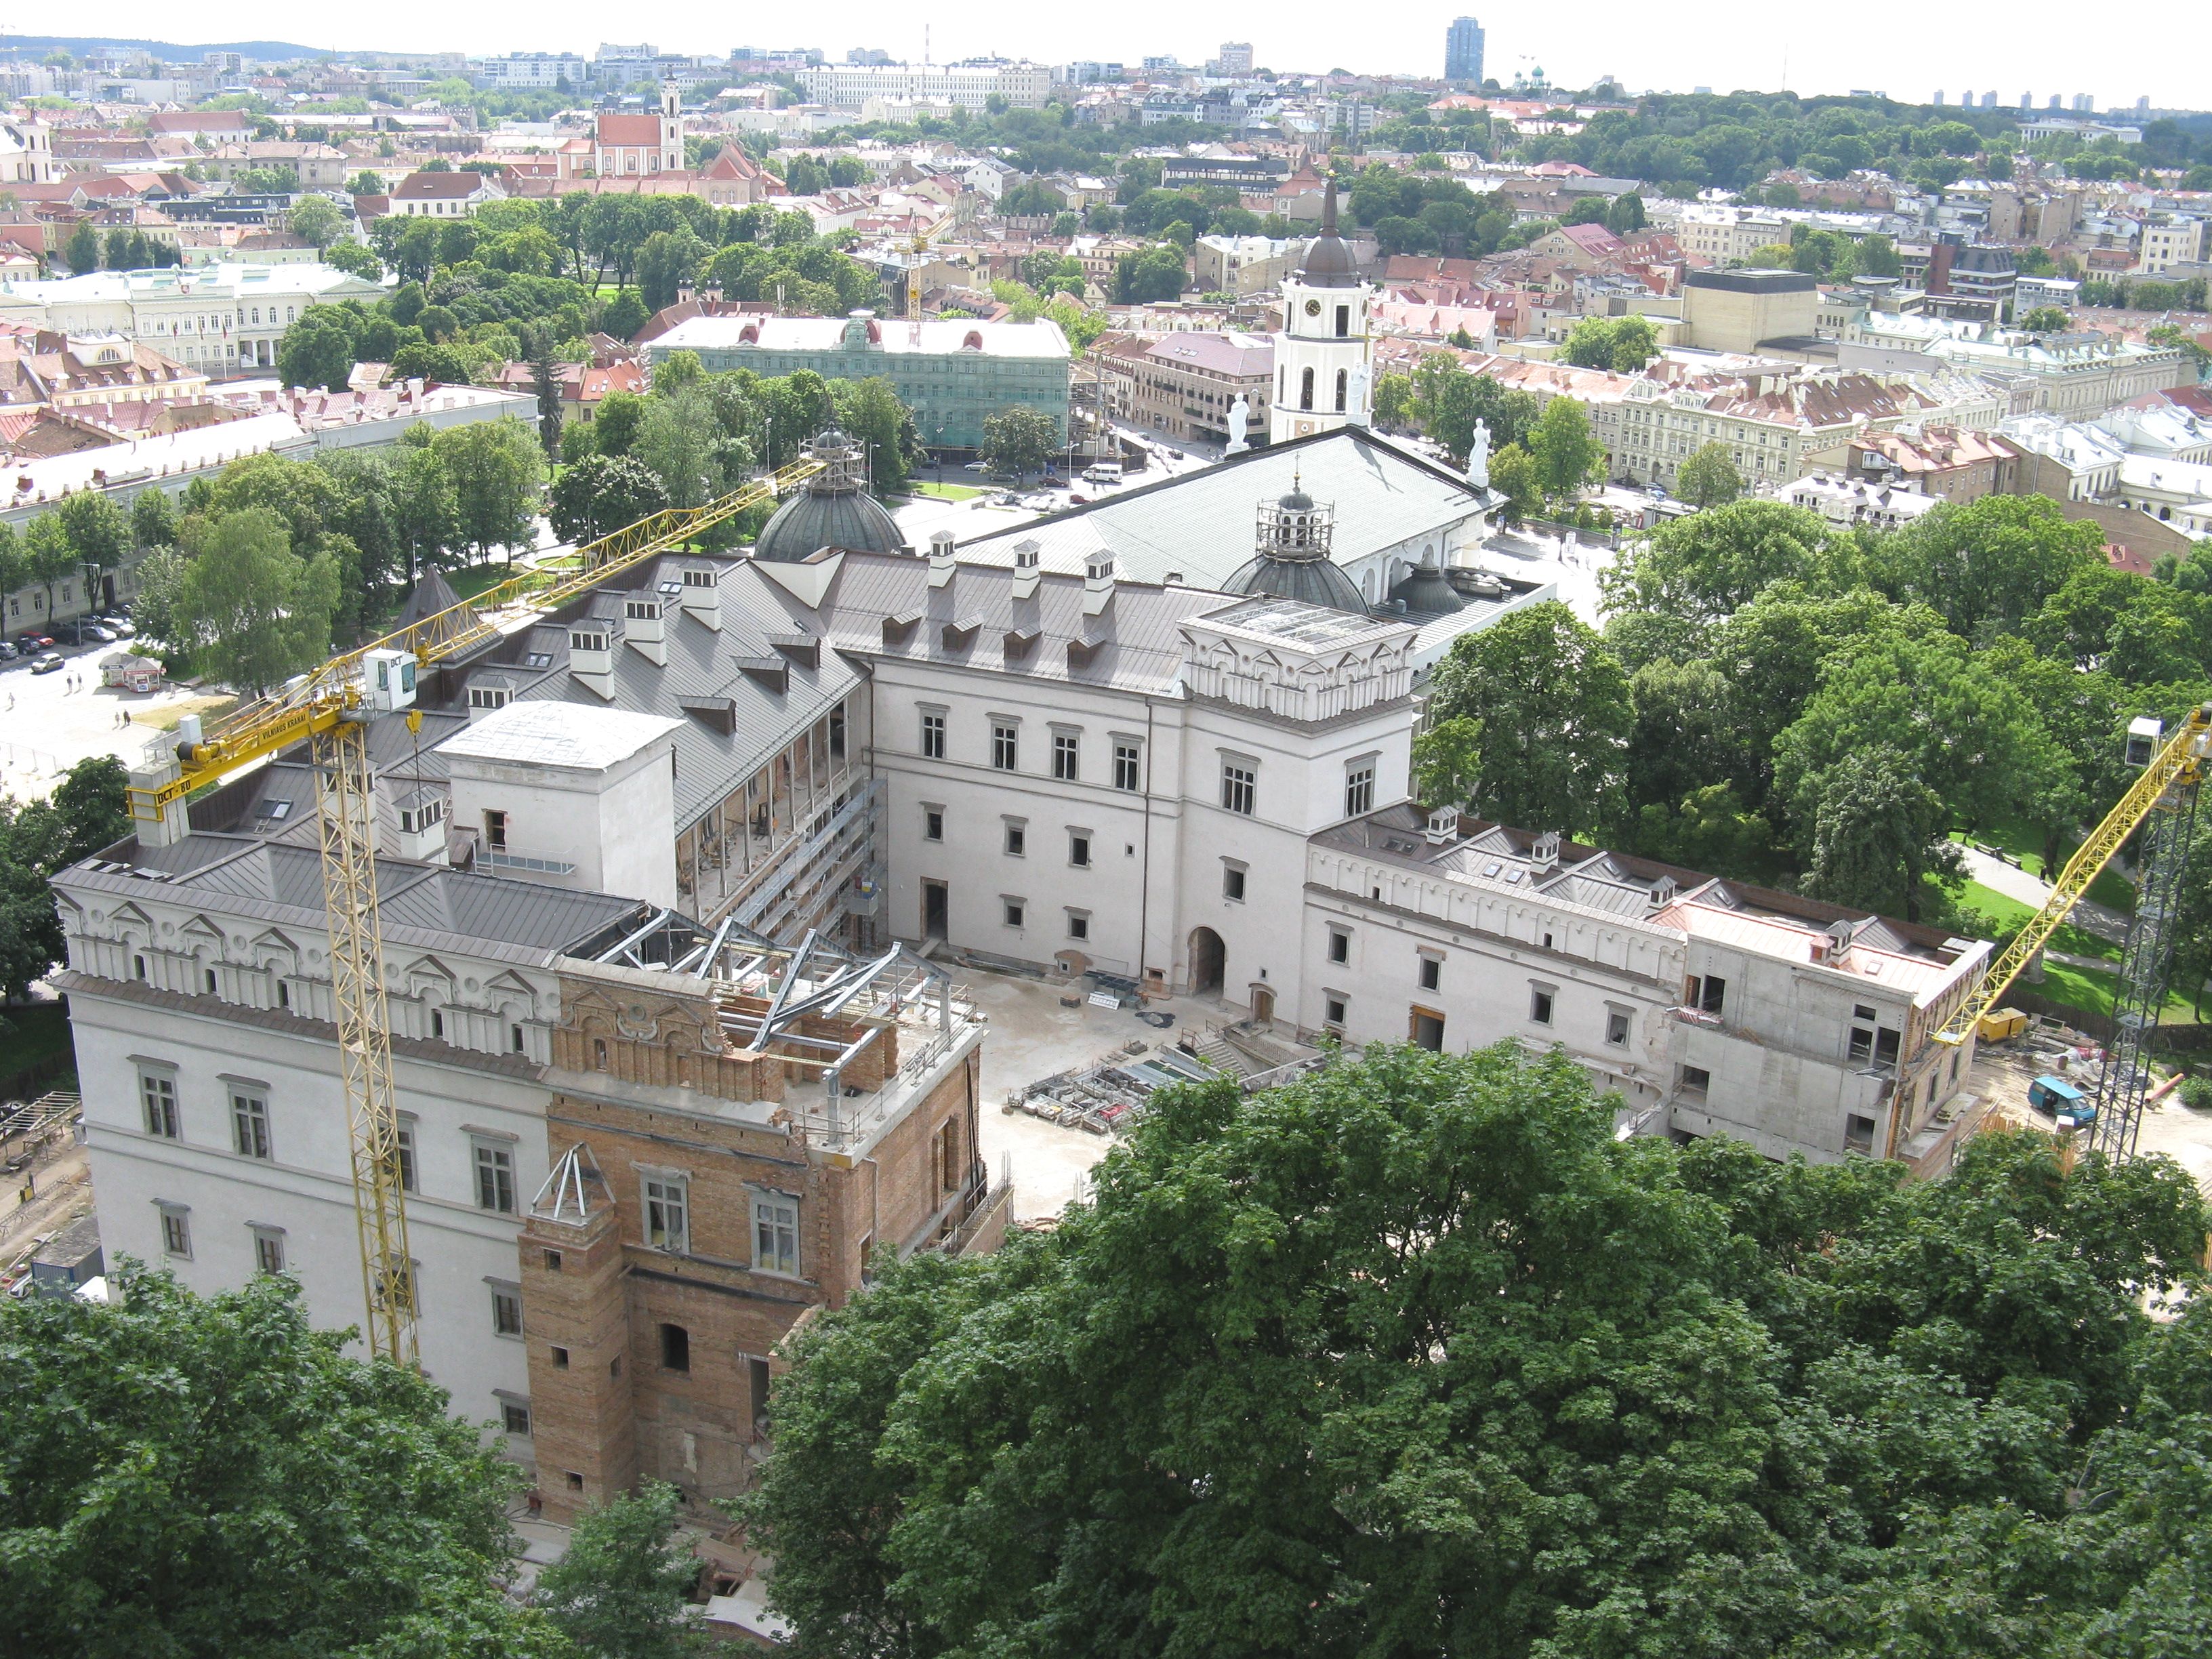 View of the castle in Vilnius